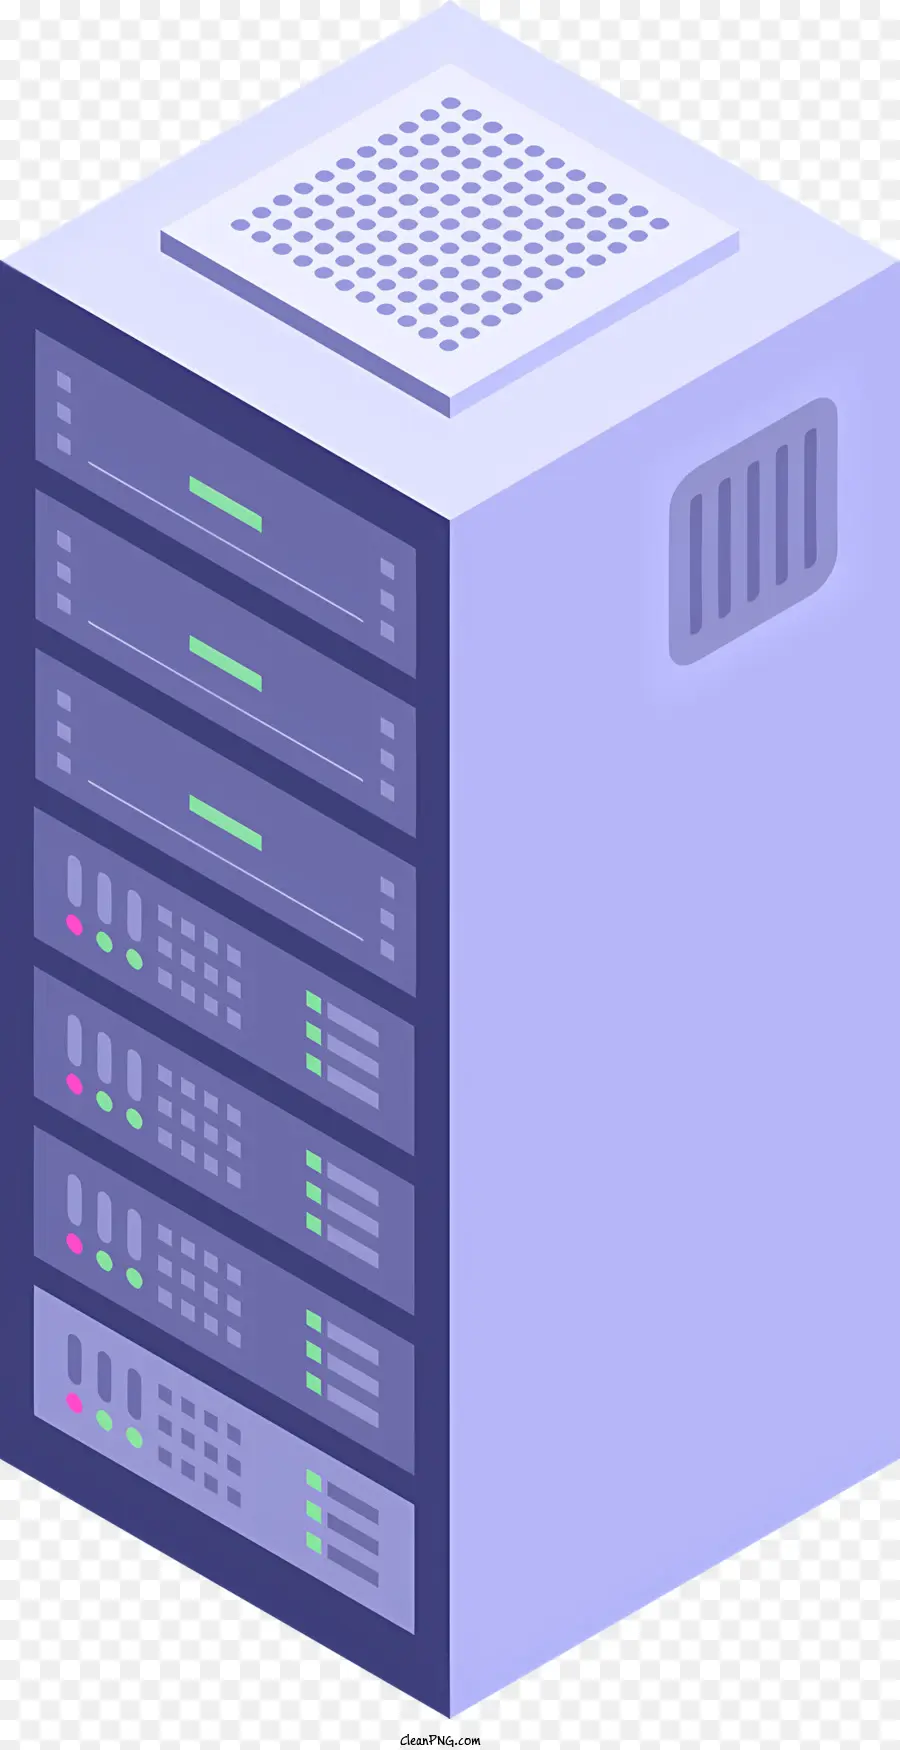 Server server cartoon server cavi rack metal - Tre server su rack collegati con i cavi